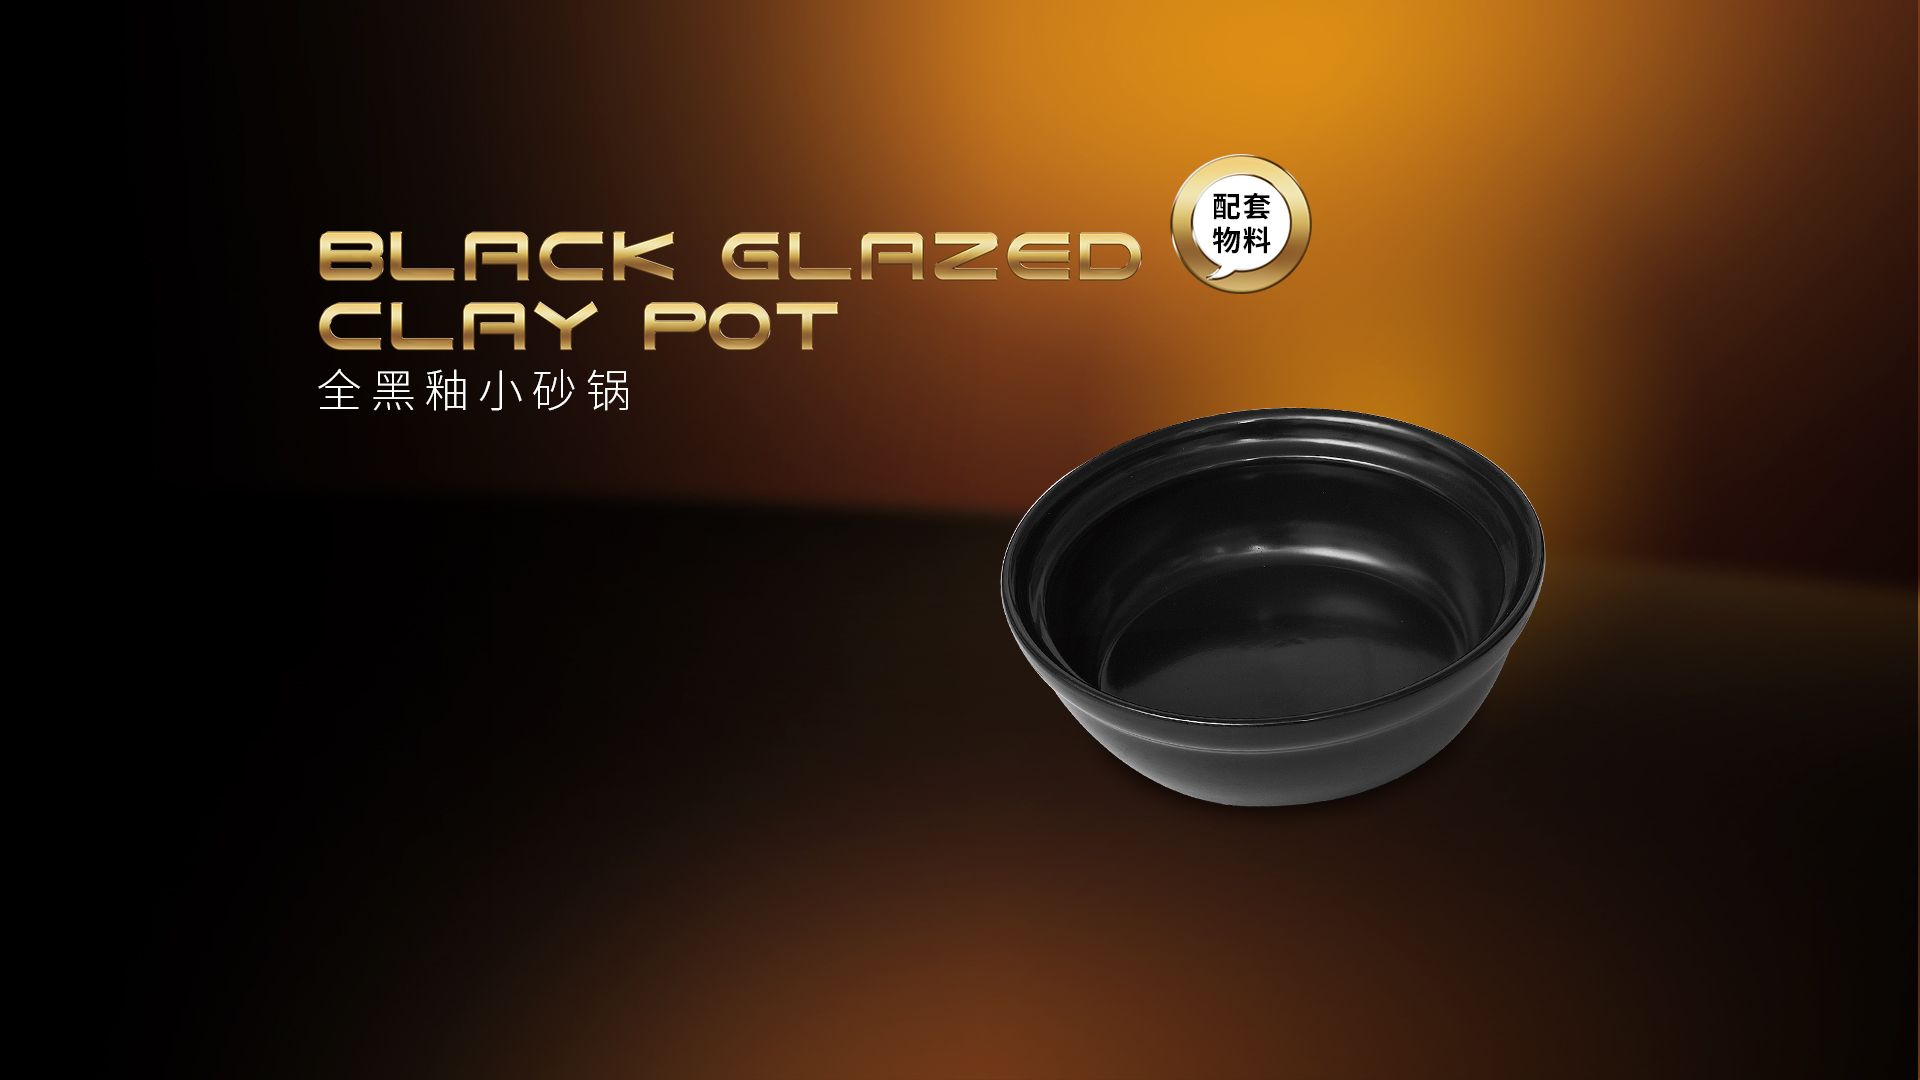 zhenghuibao_supporing_materials_black_glaze_clay_pot_small_details_page.jpg